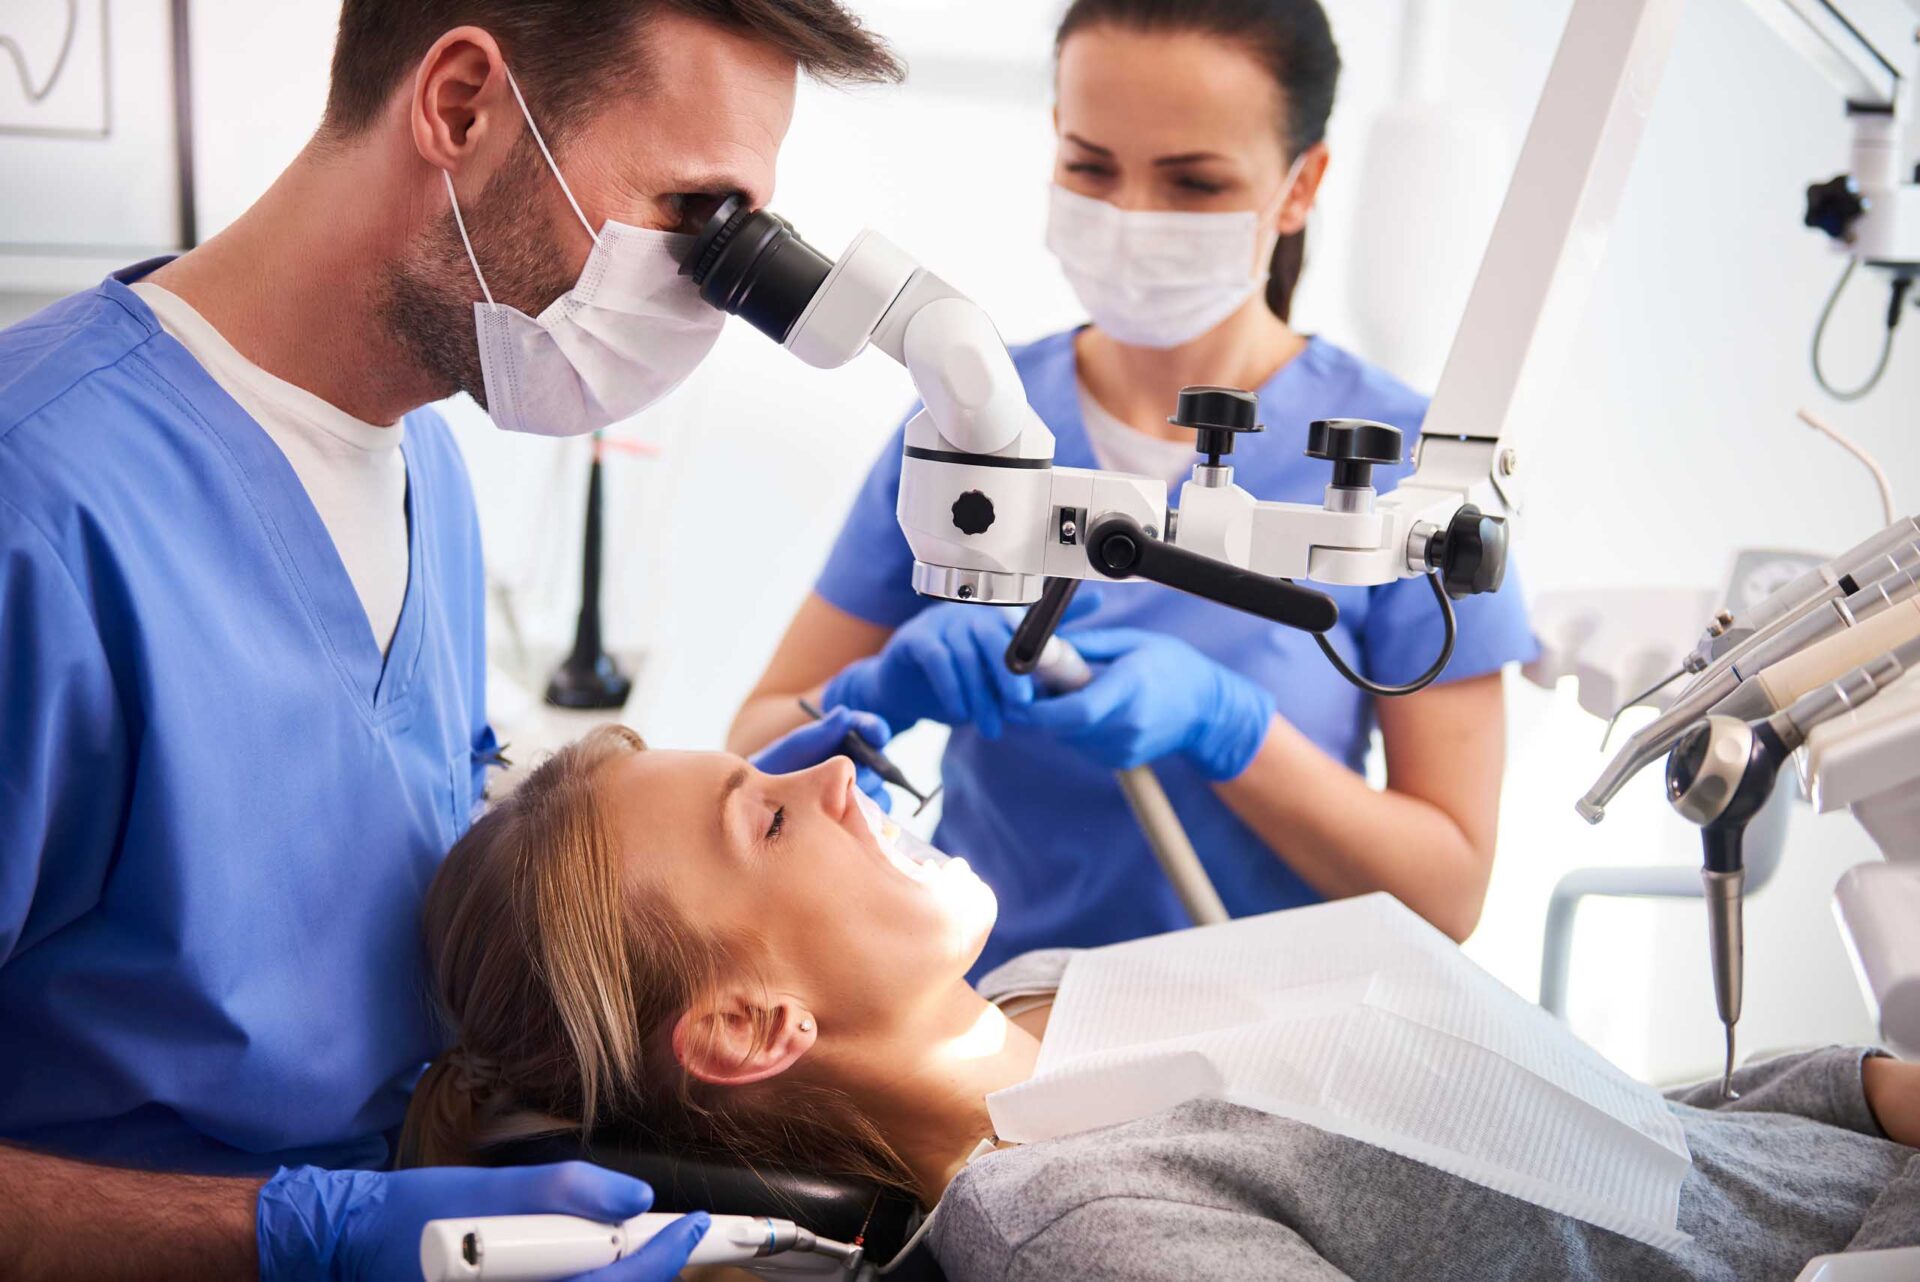 A dentist examines a patient's teeth through a dental microscope